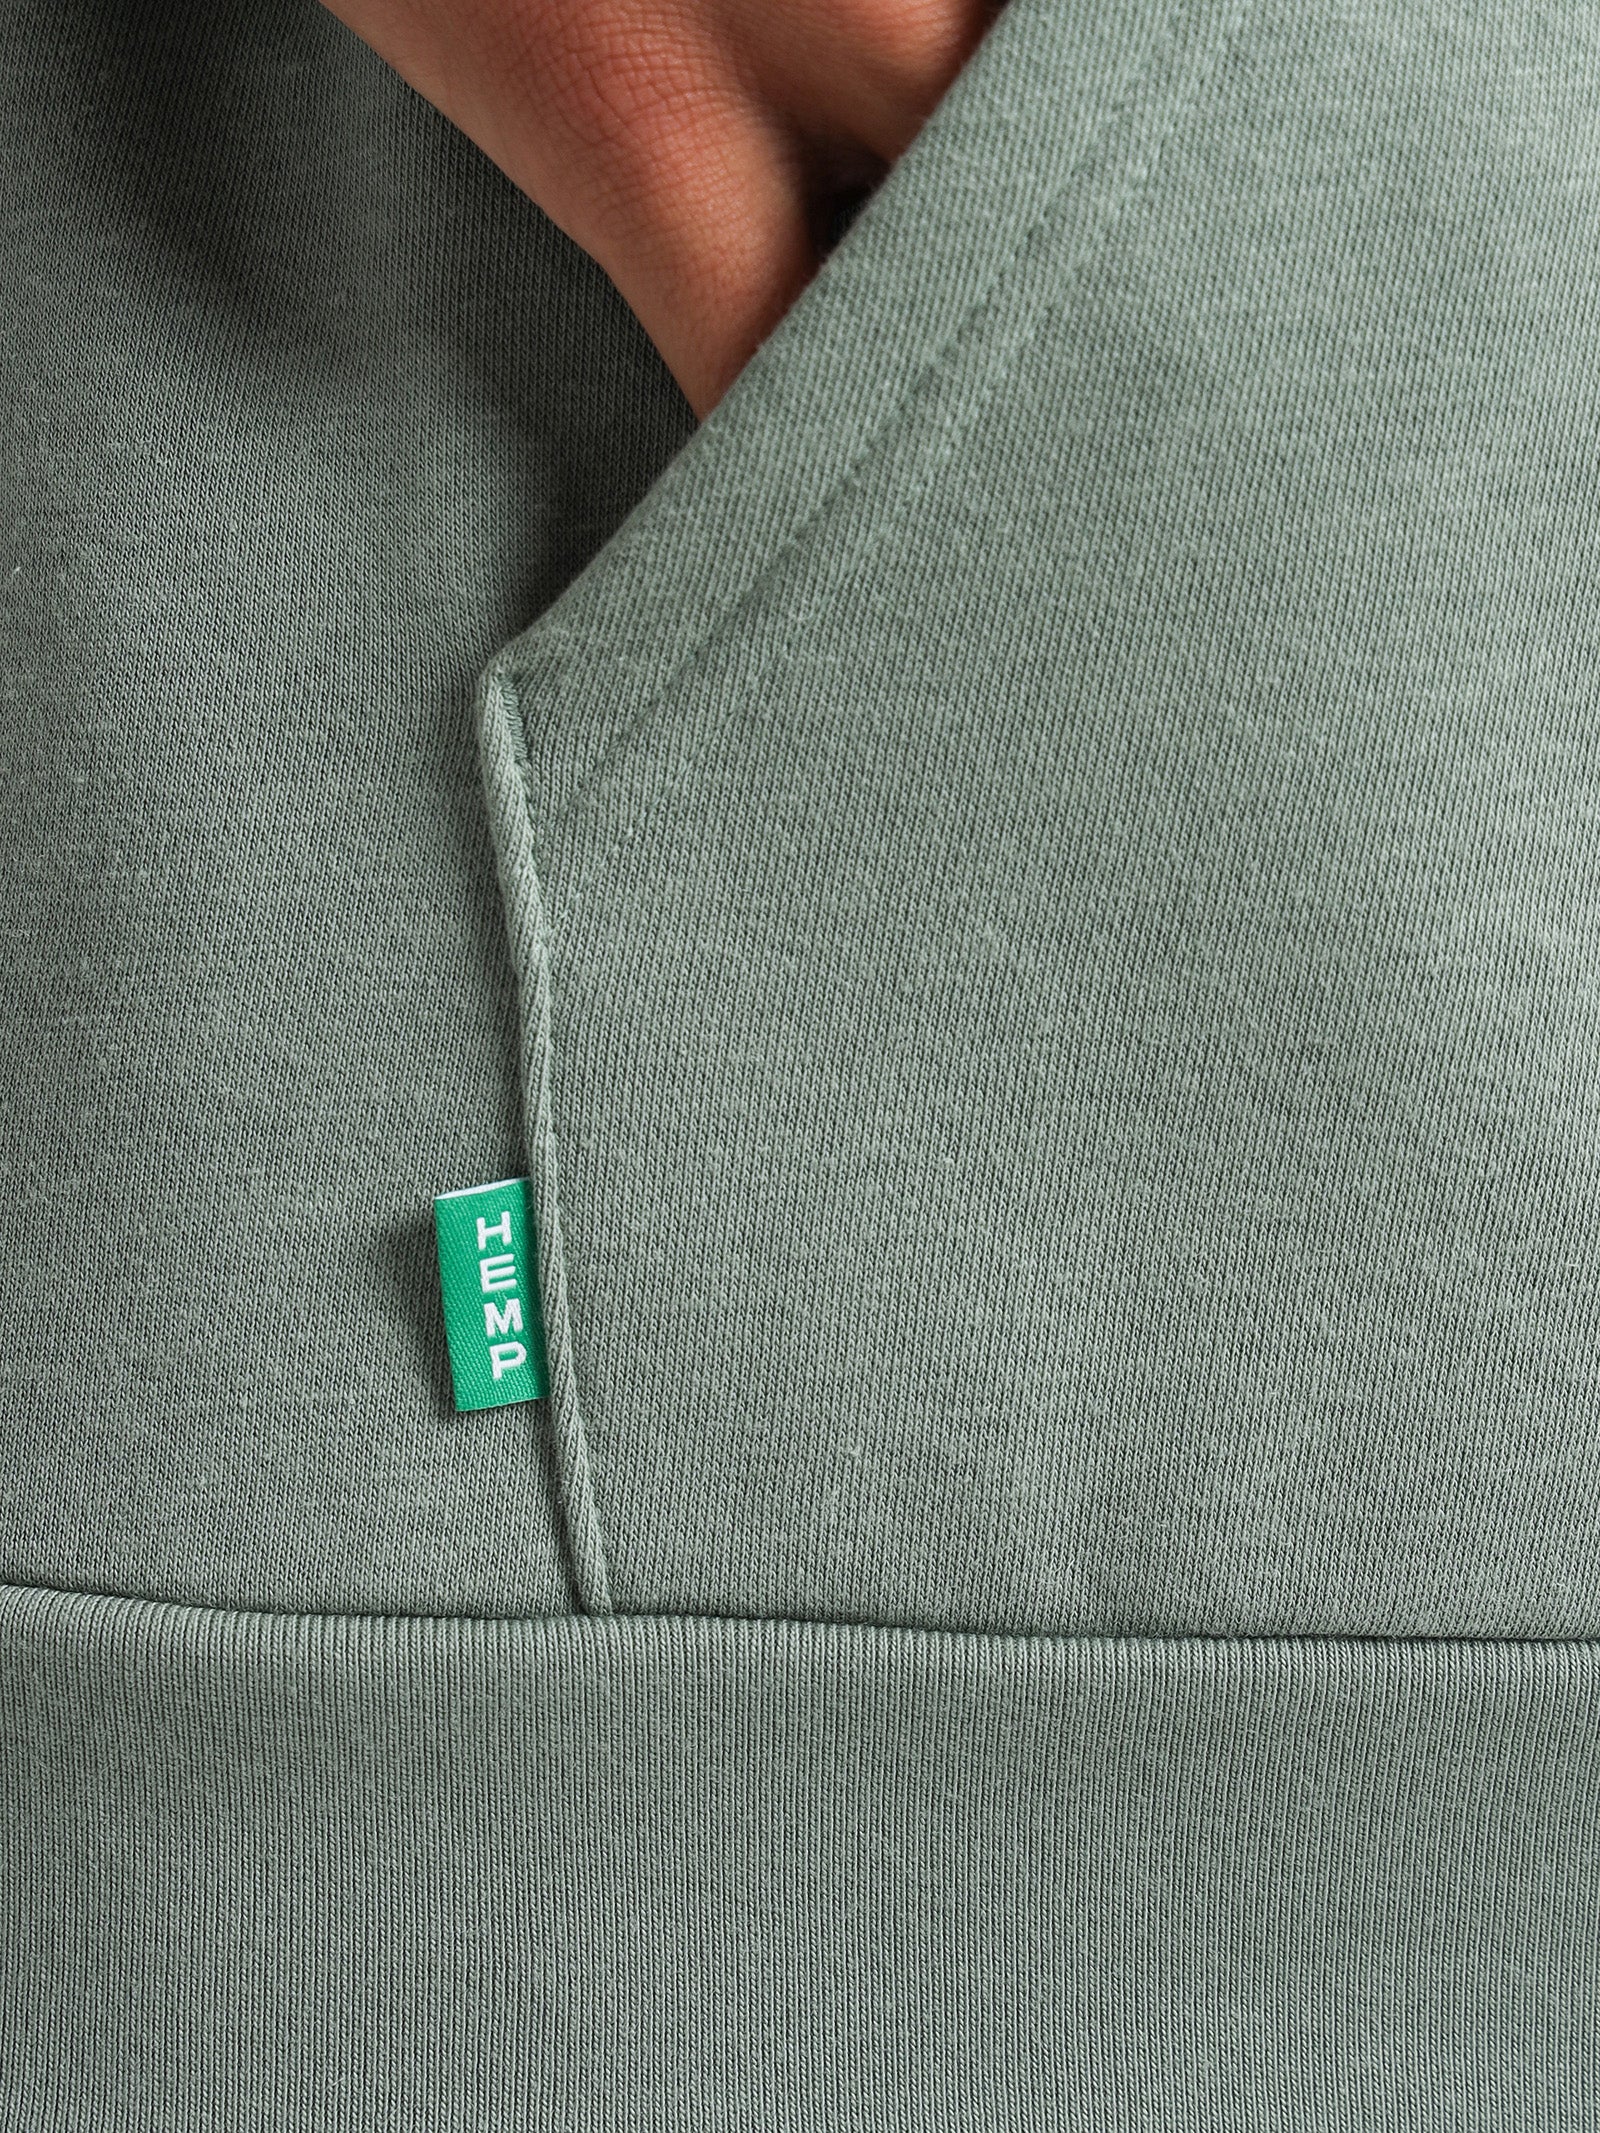 Essentials + Store Hoodie in - Silver Made Hemp Glue Green With